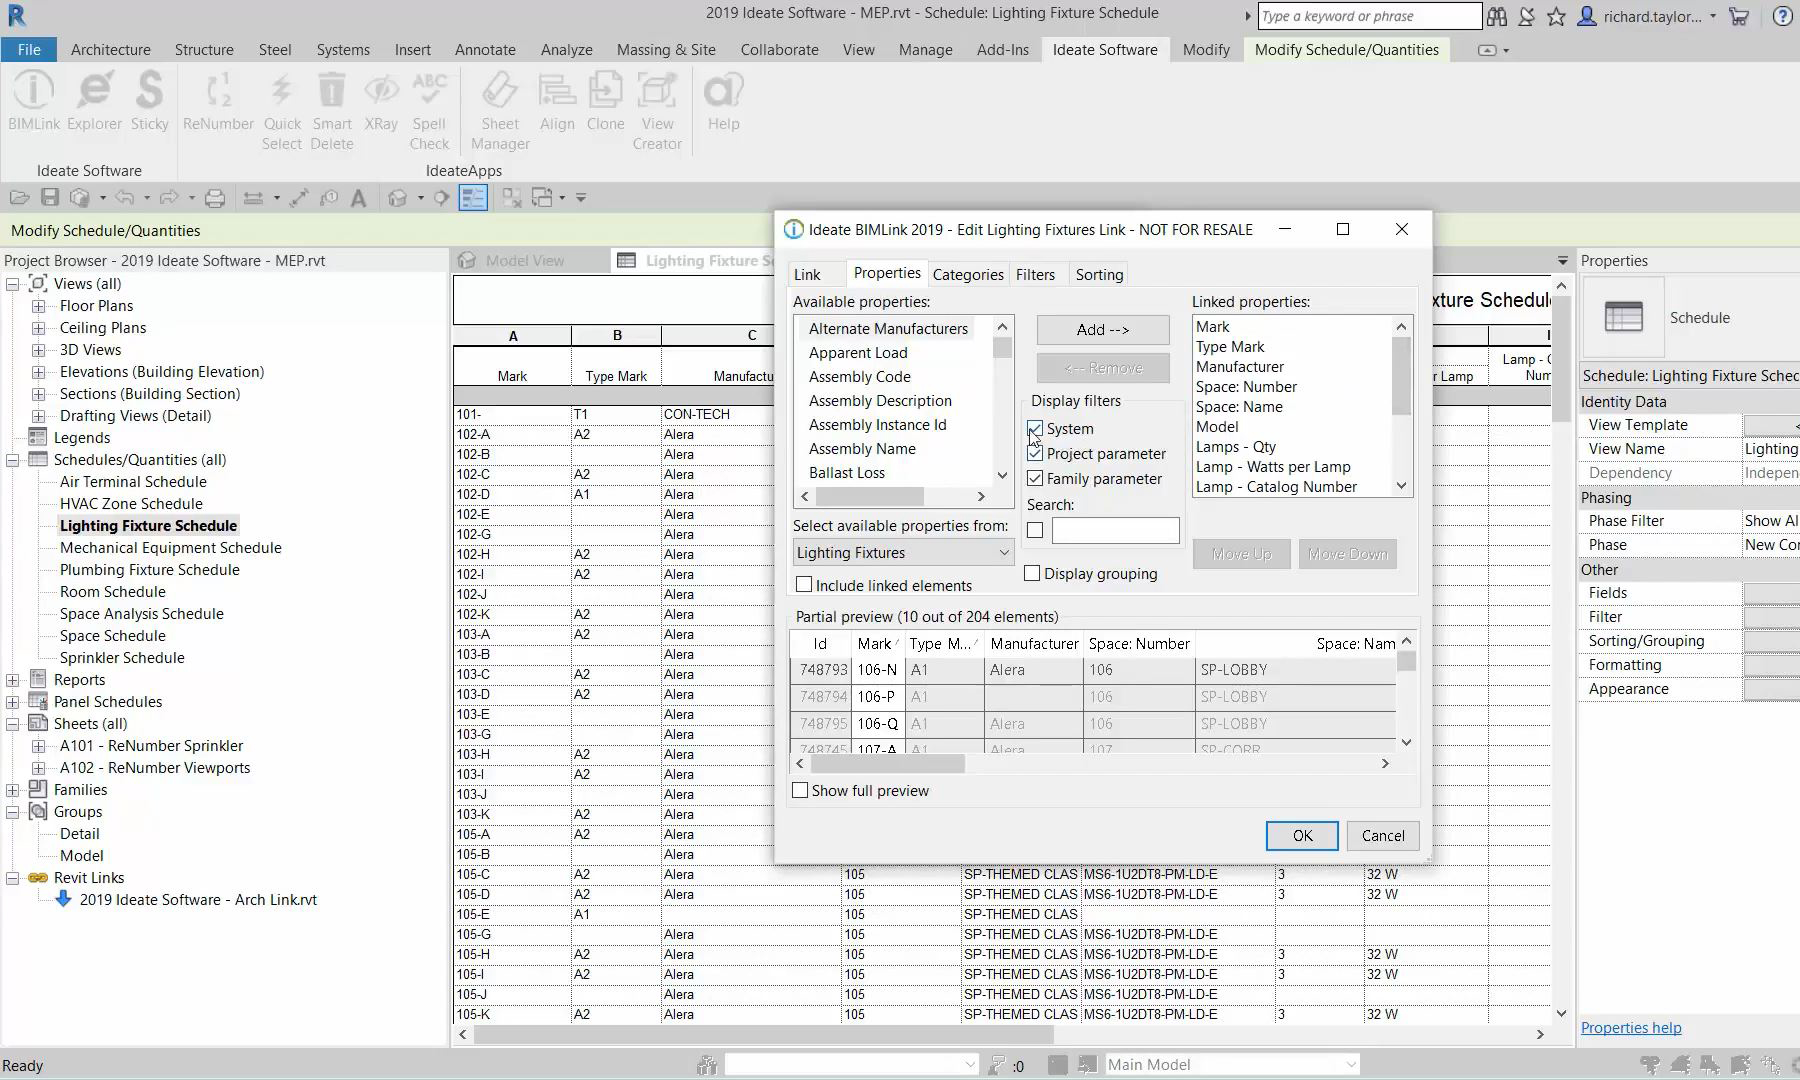 Ideate BIMLink - Excel